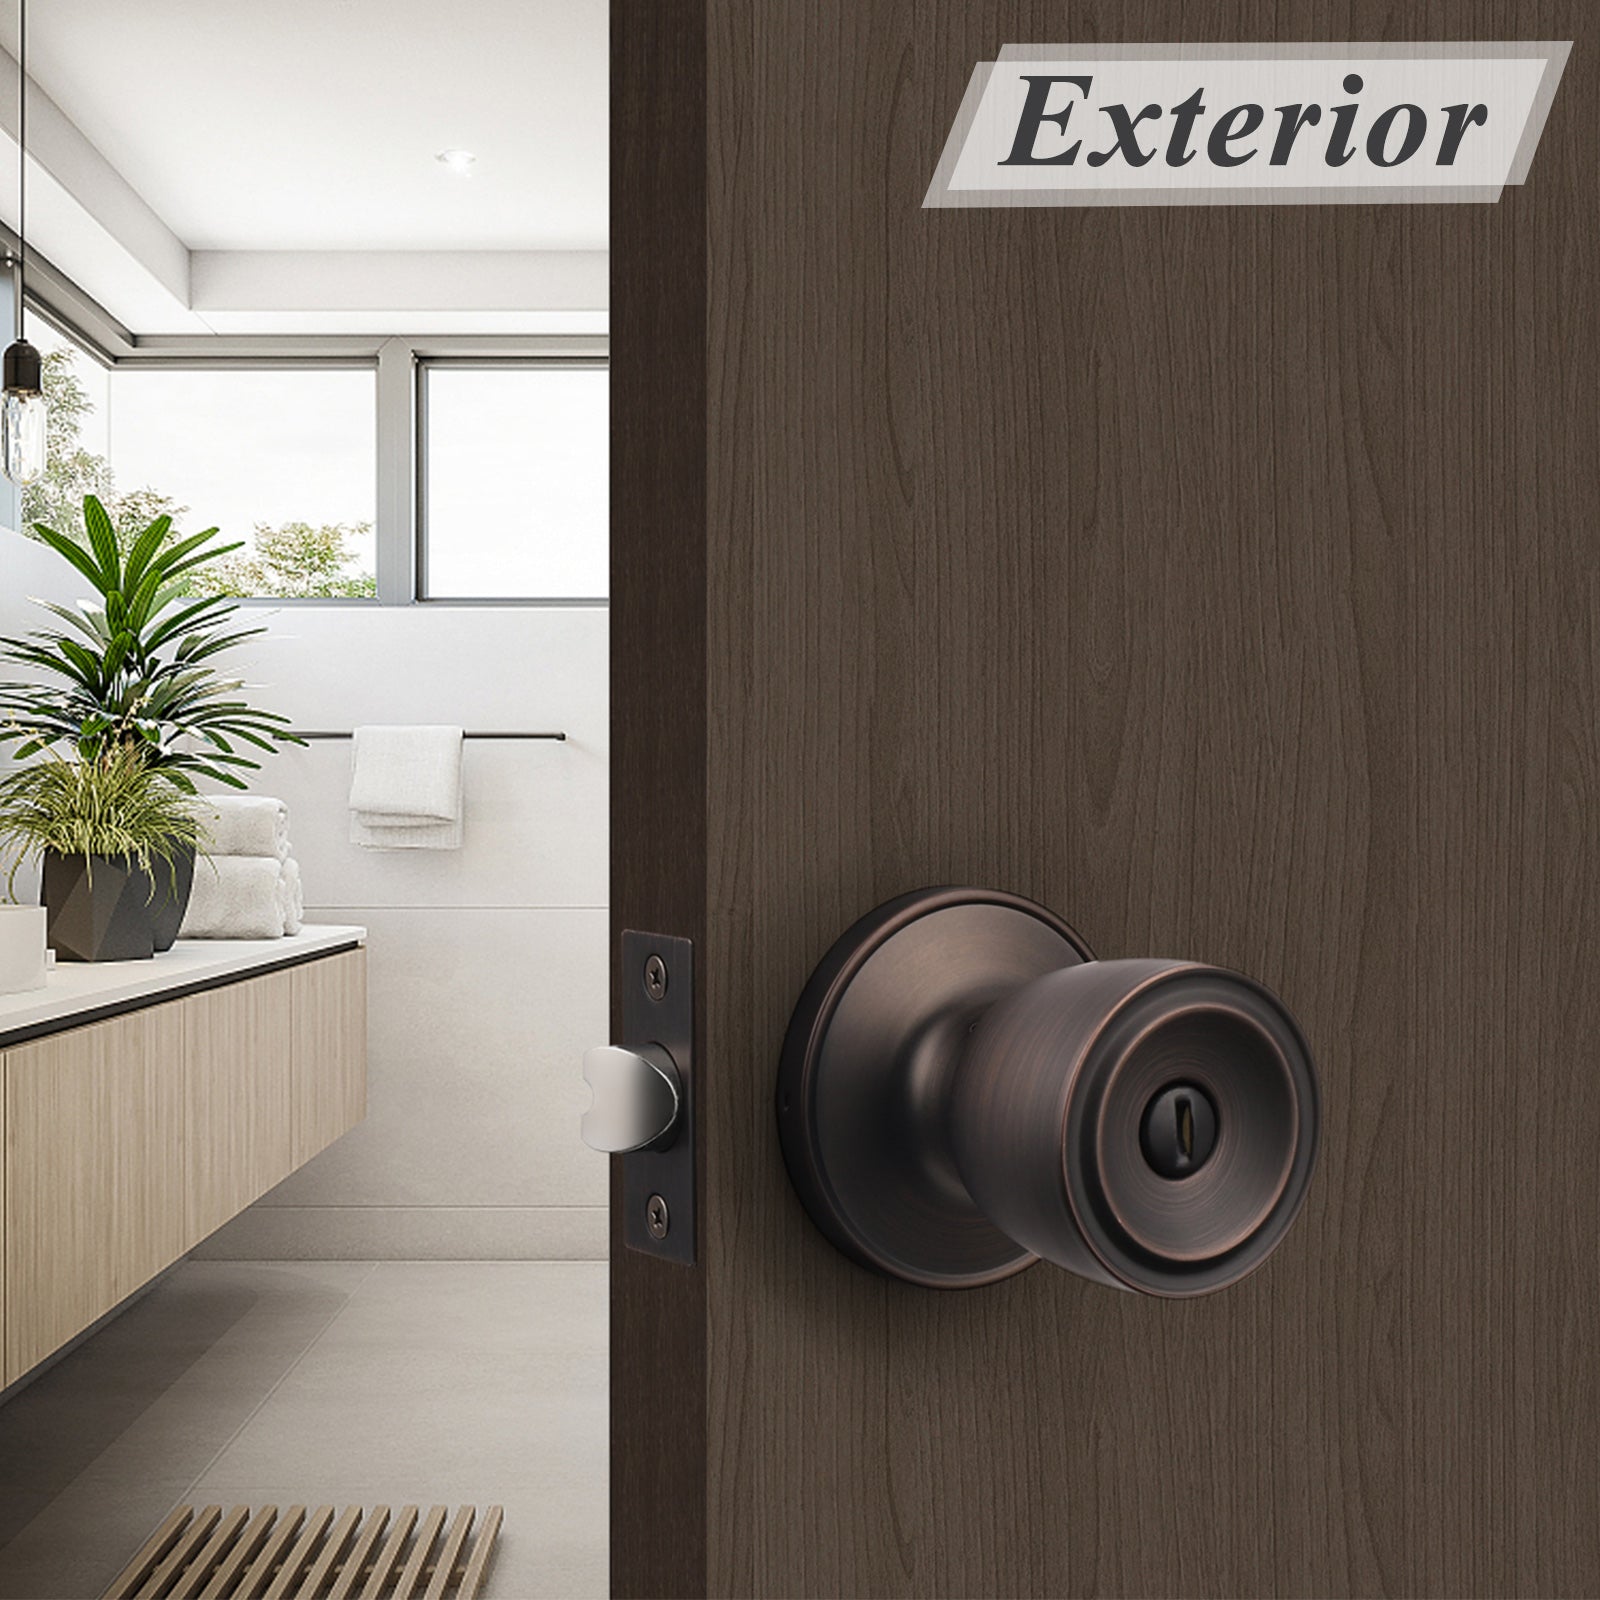 Tulip Door Knob Privacy Lock for Bedroom Bathroom, Oil Rubbed Bronze Finish DL591ORBBK